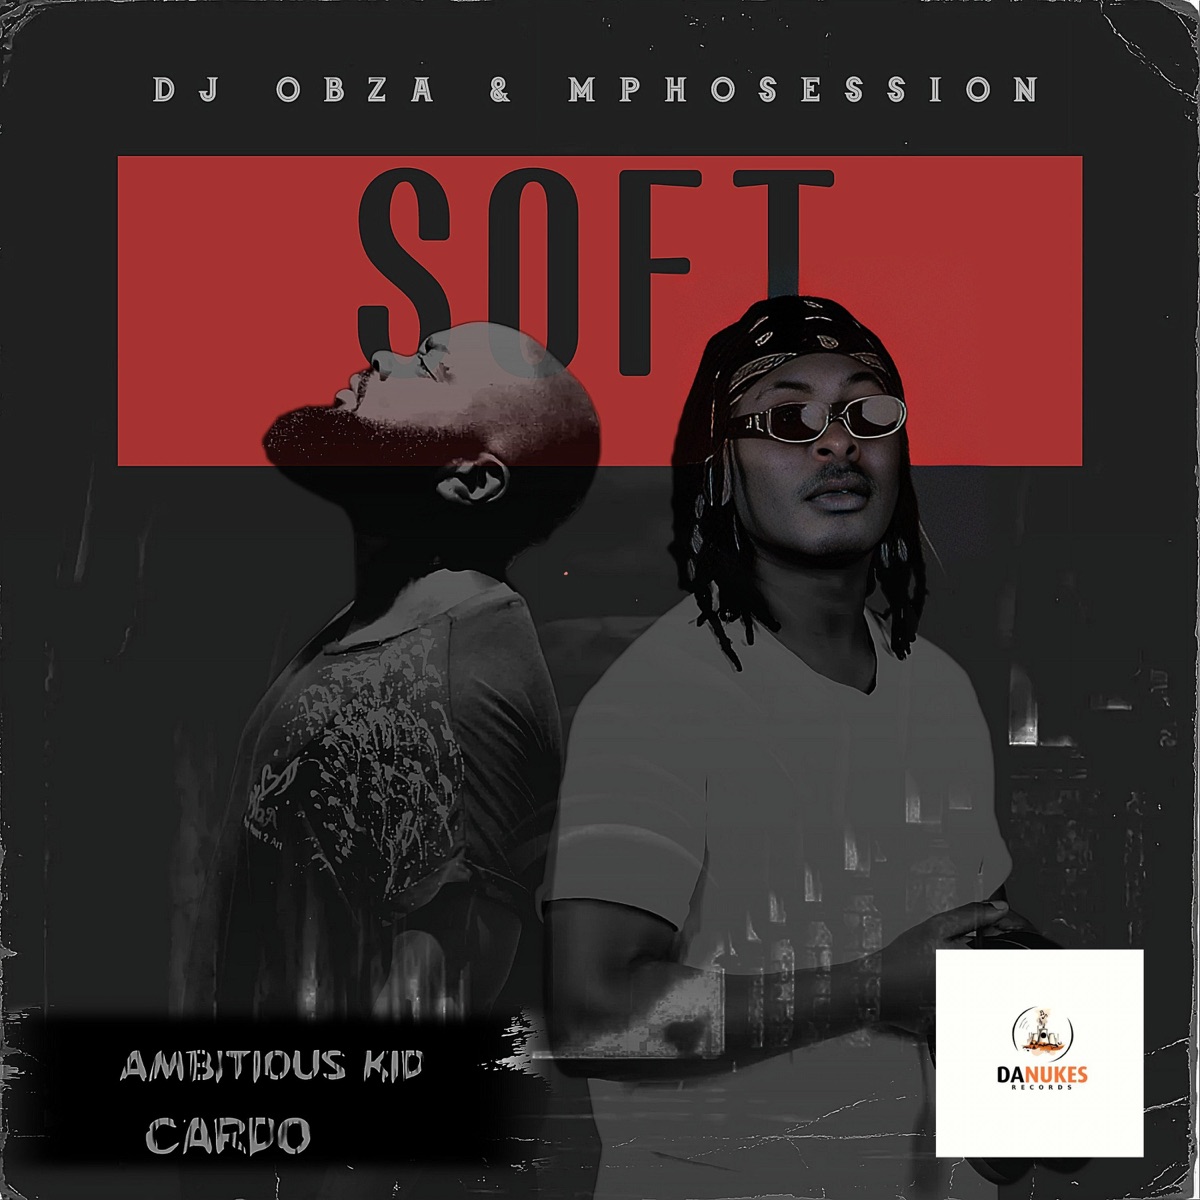 Dj Obza &Amp; Dj Mposession - Just Soft Ft. Ambitious Kid &Amp; Cardo 1